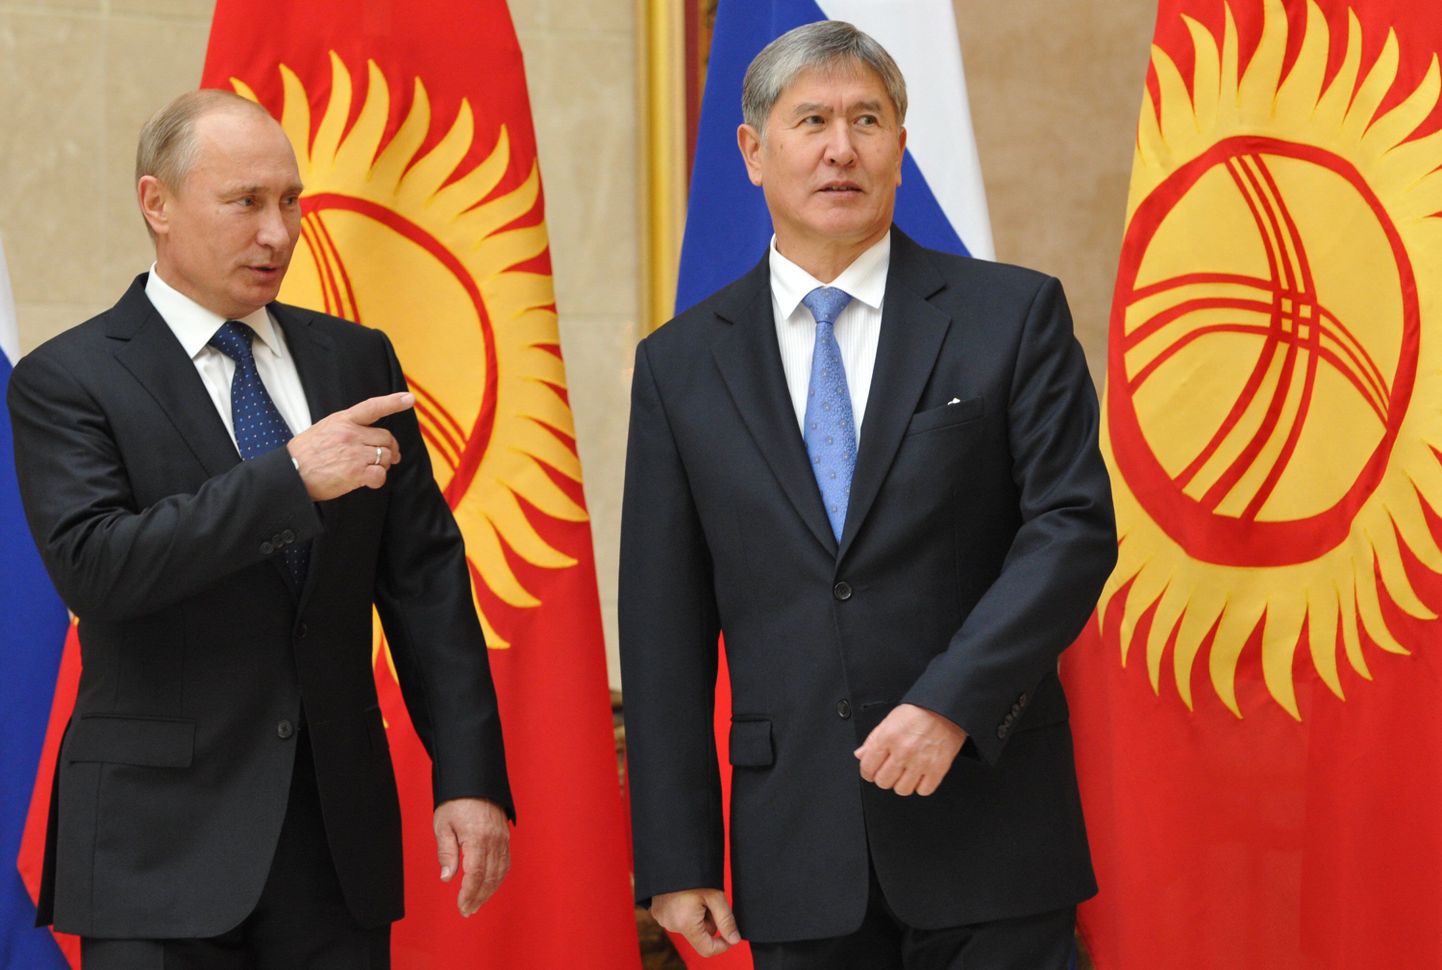 Kõrgõzstani president Almazbek Atambajev (paremal) koos Vene riigipea Vladimir Putiniga täna Biškekis.